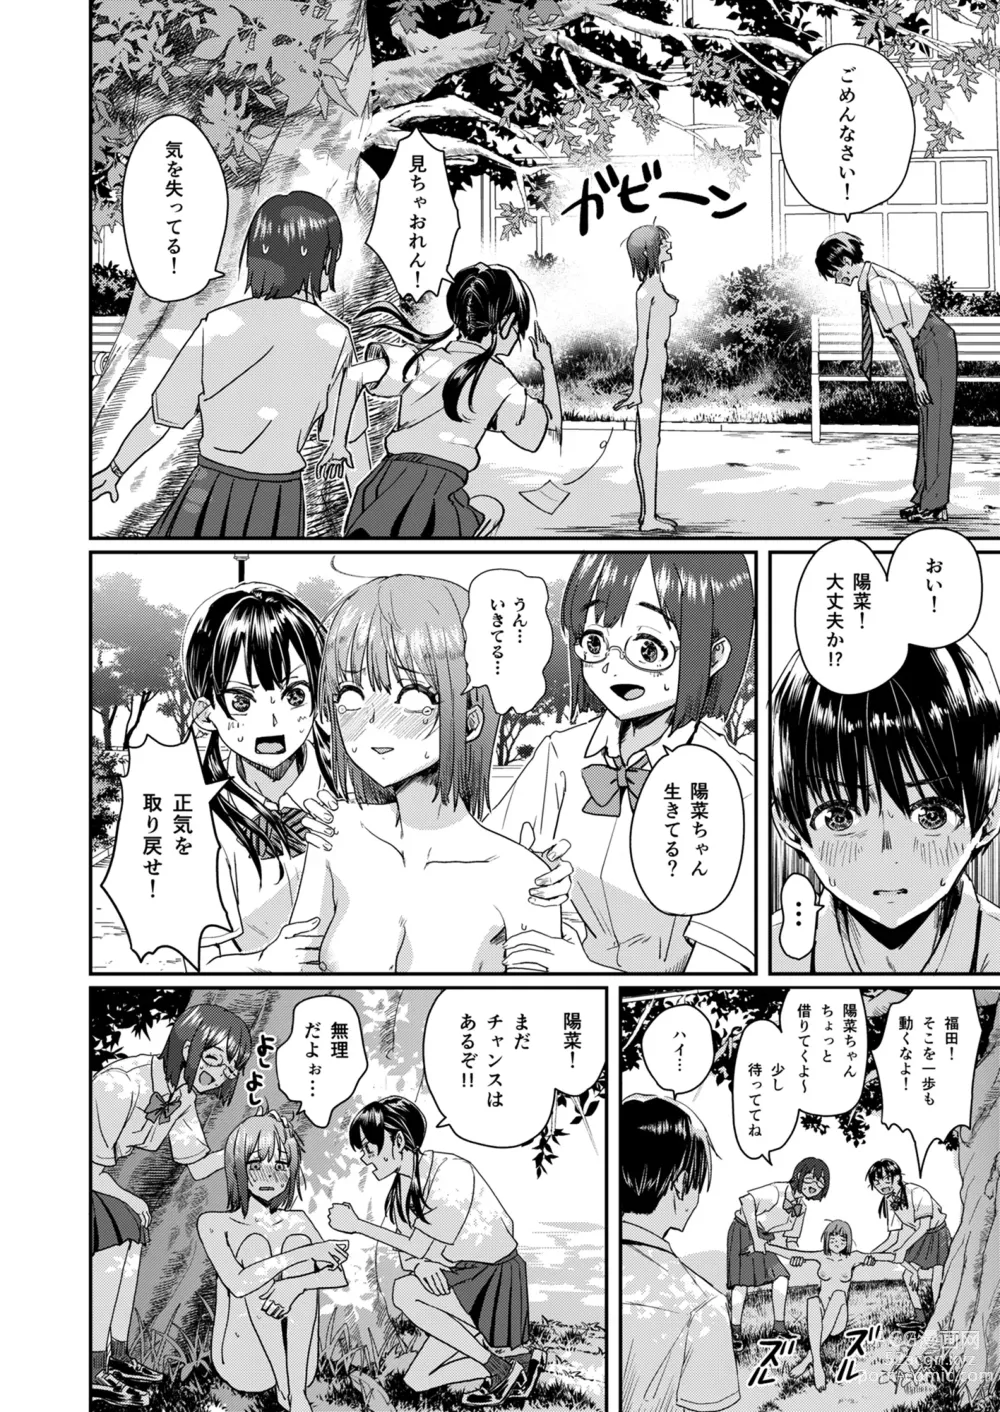 Page 19 of doujinshi Zenra Kokuhaku.